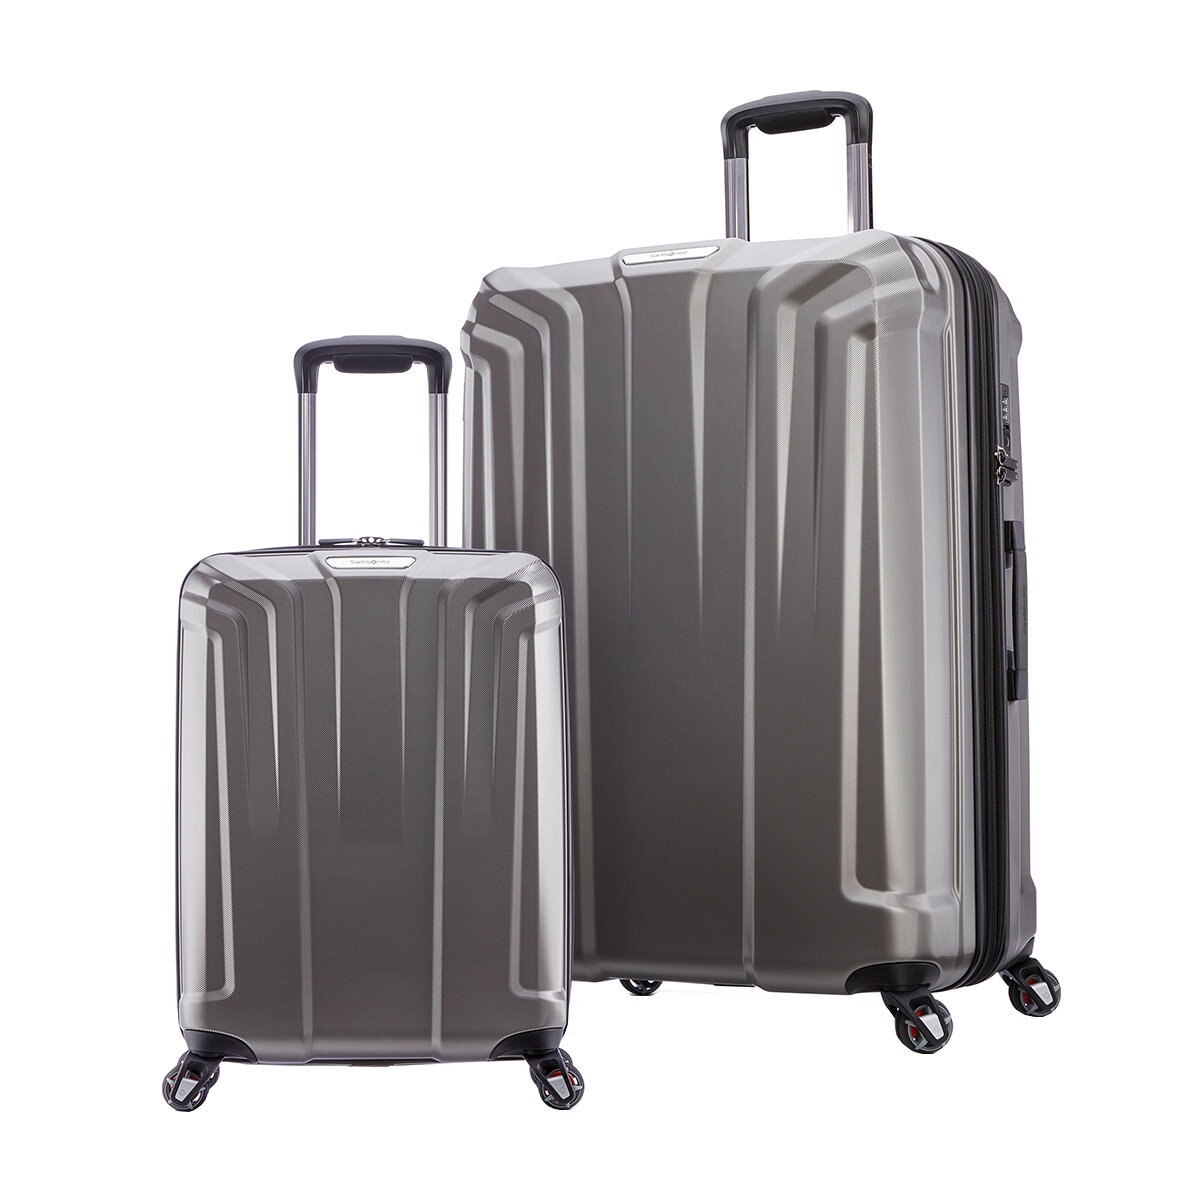 Samsonite Endure 2 Piece Hardside Luggage Set Warm grey